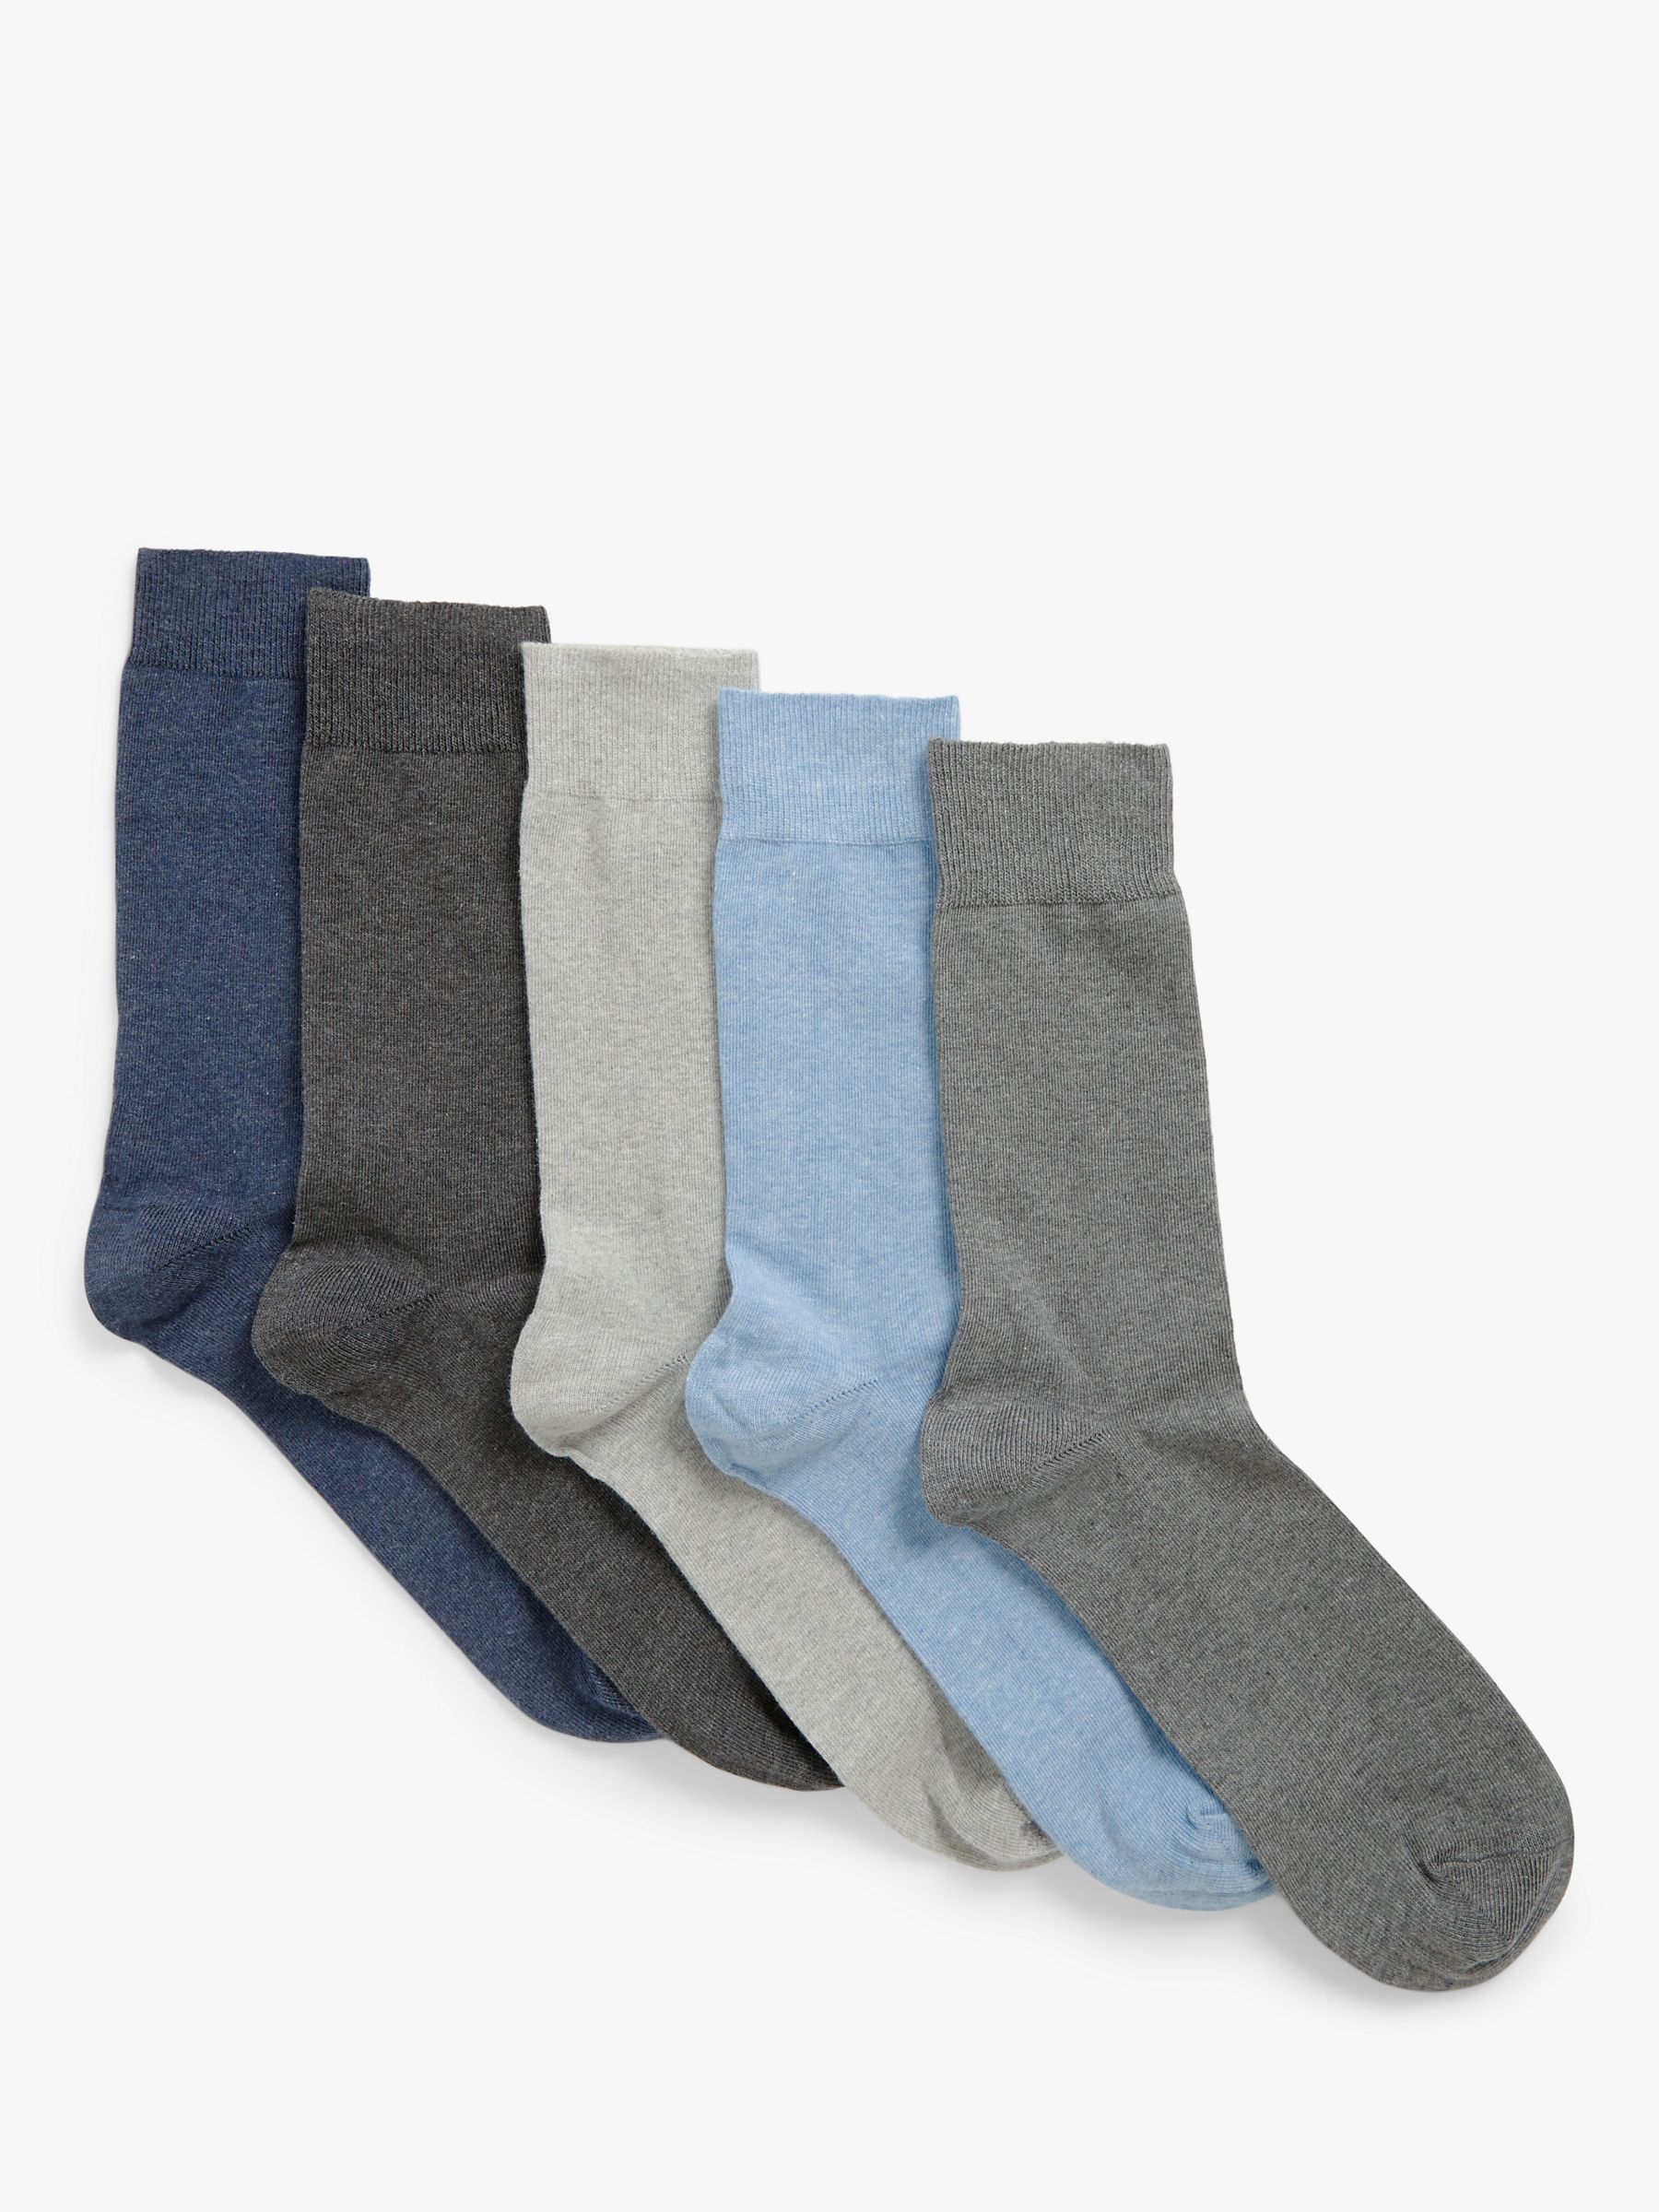 John Lewis ANYDAY Cotton Rich Plain Men's Socks, Pack of 5, Grey/Blue ...